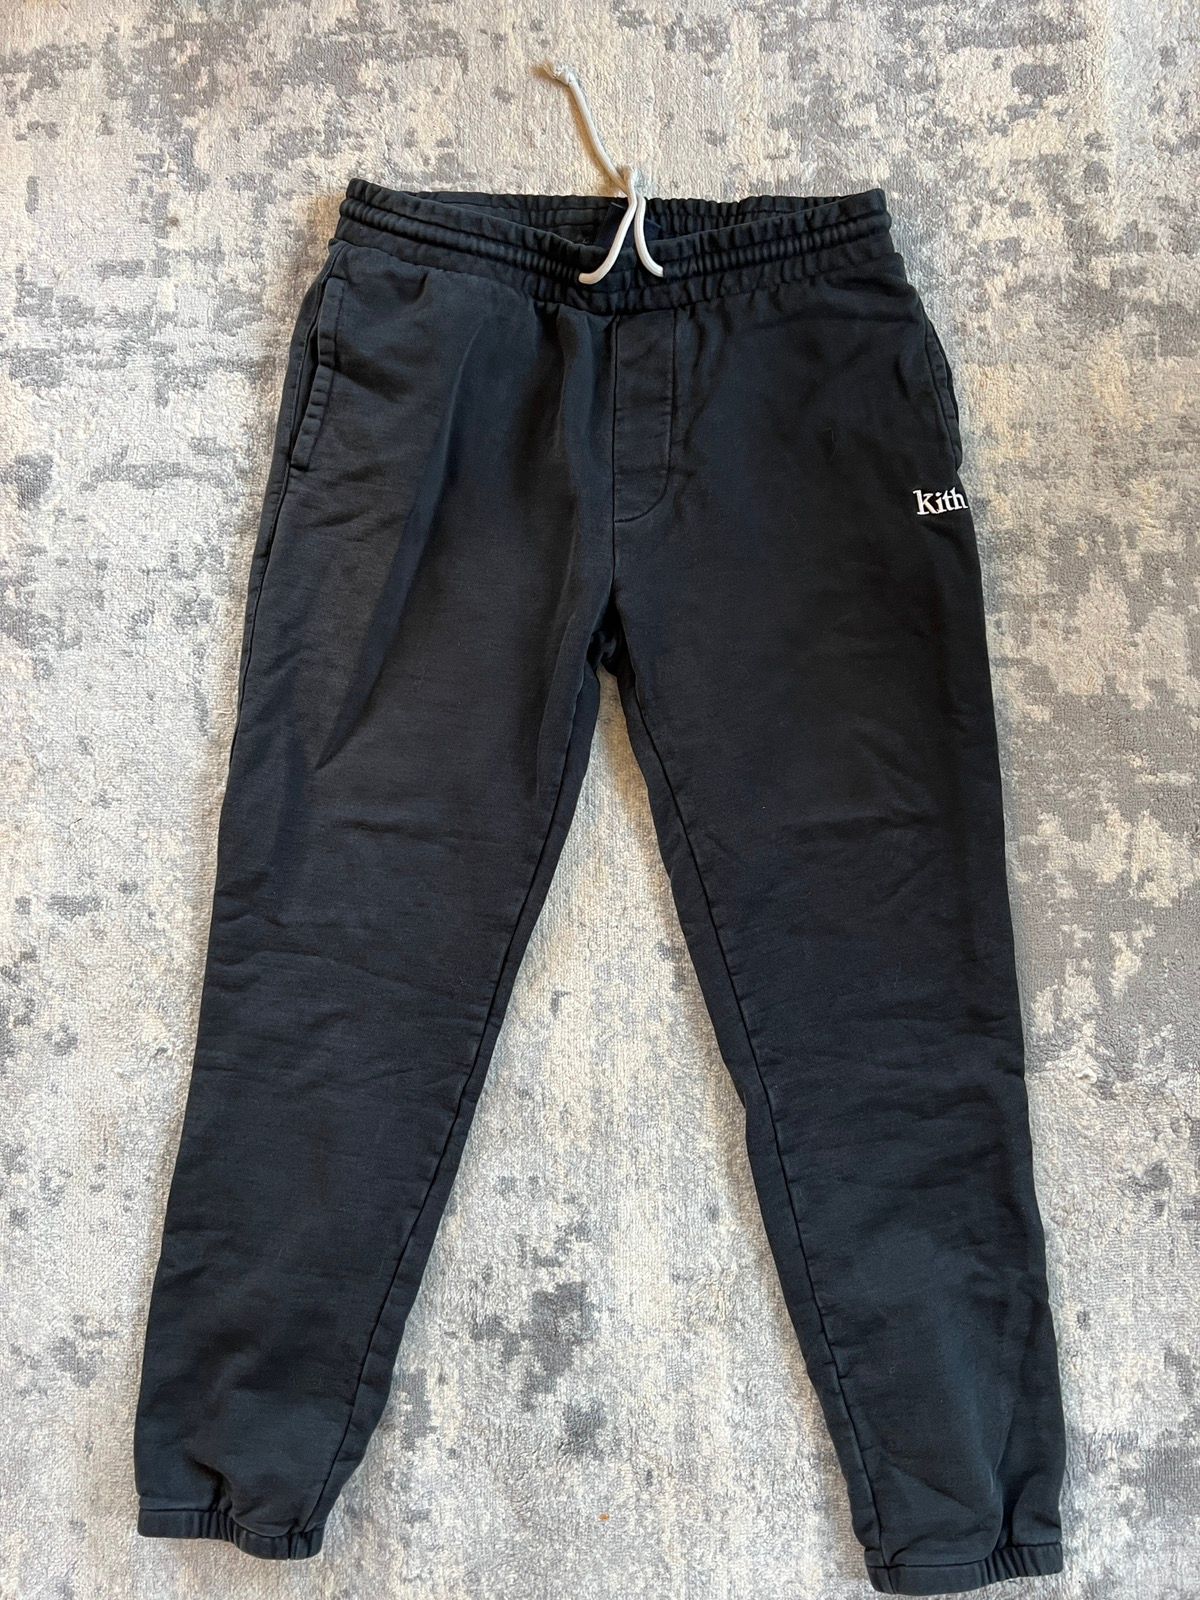 Kith Williams 2 Sweatpants Large Black | Grailed